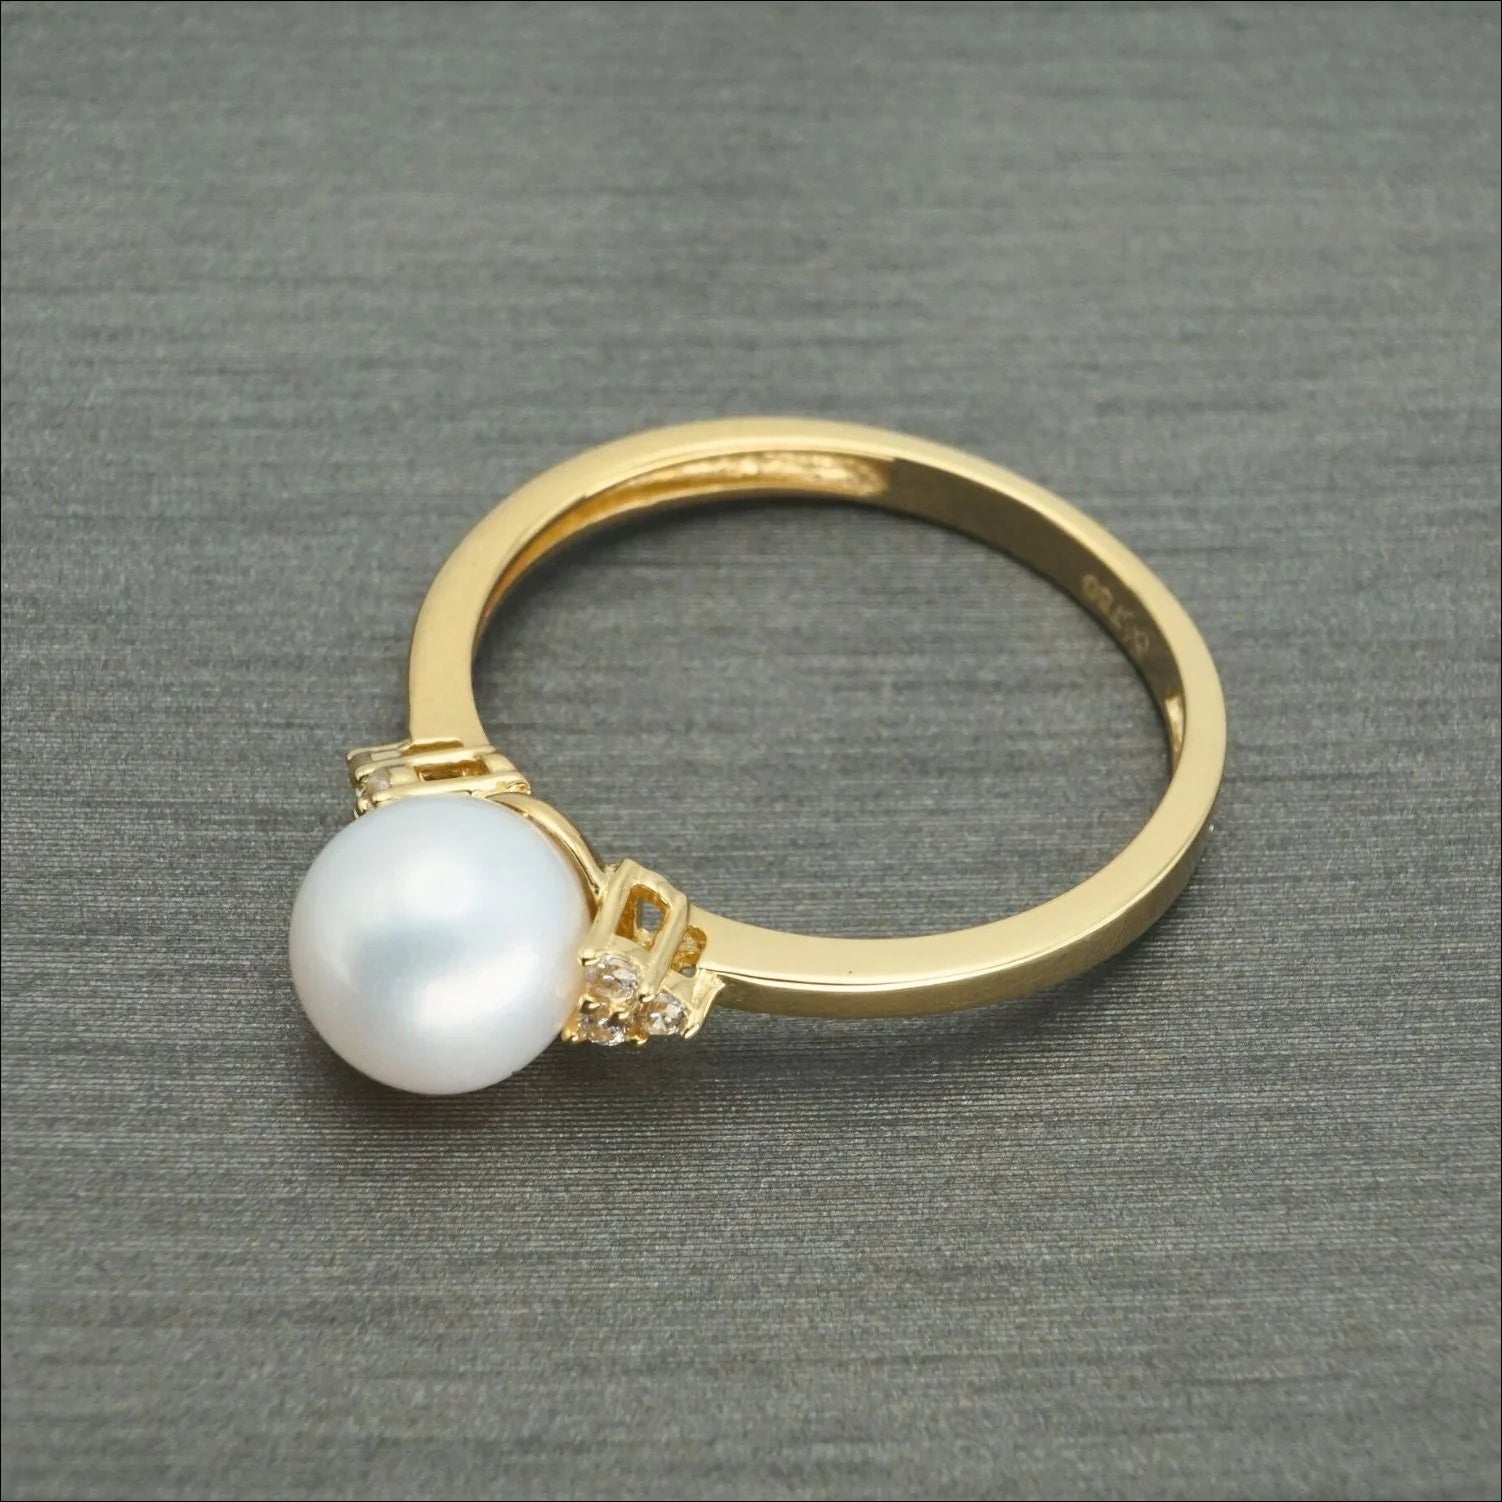 Golden Elegance: Stunning 7mm Pearl Ring | Rings